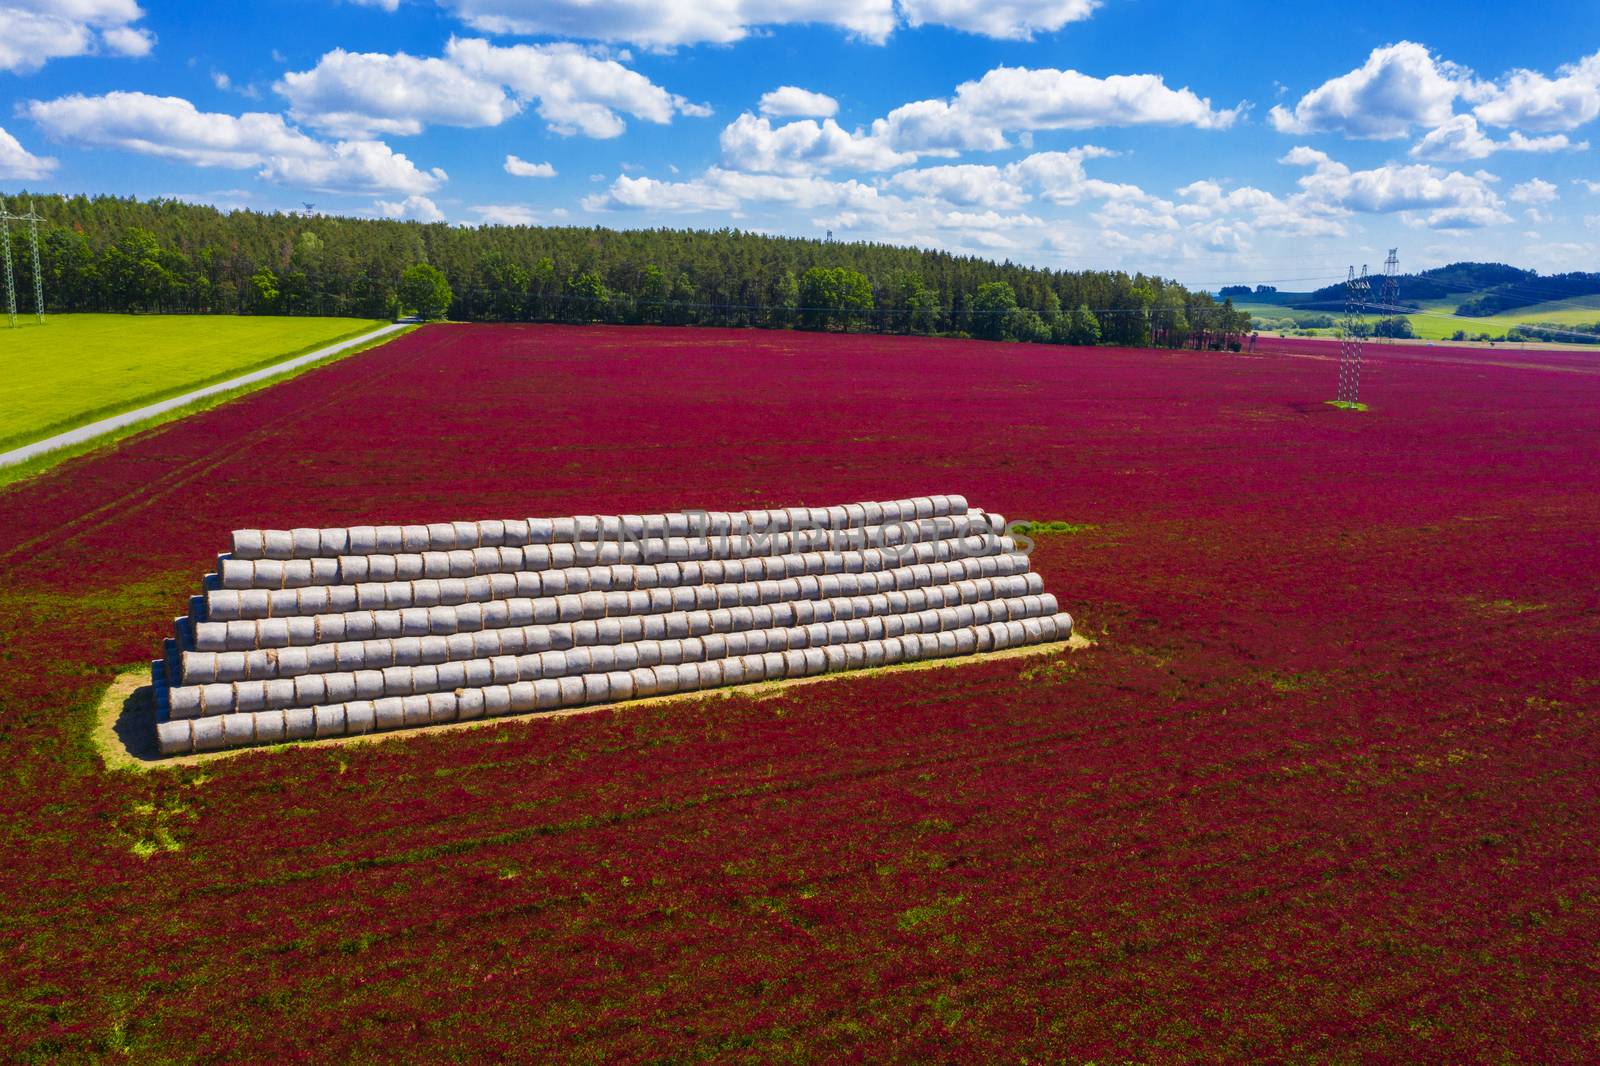 Red blooming crimson clover field (Trifolium incarnatum) surrounding pyramid of hay bales from above